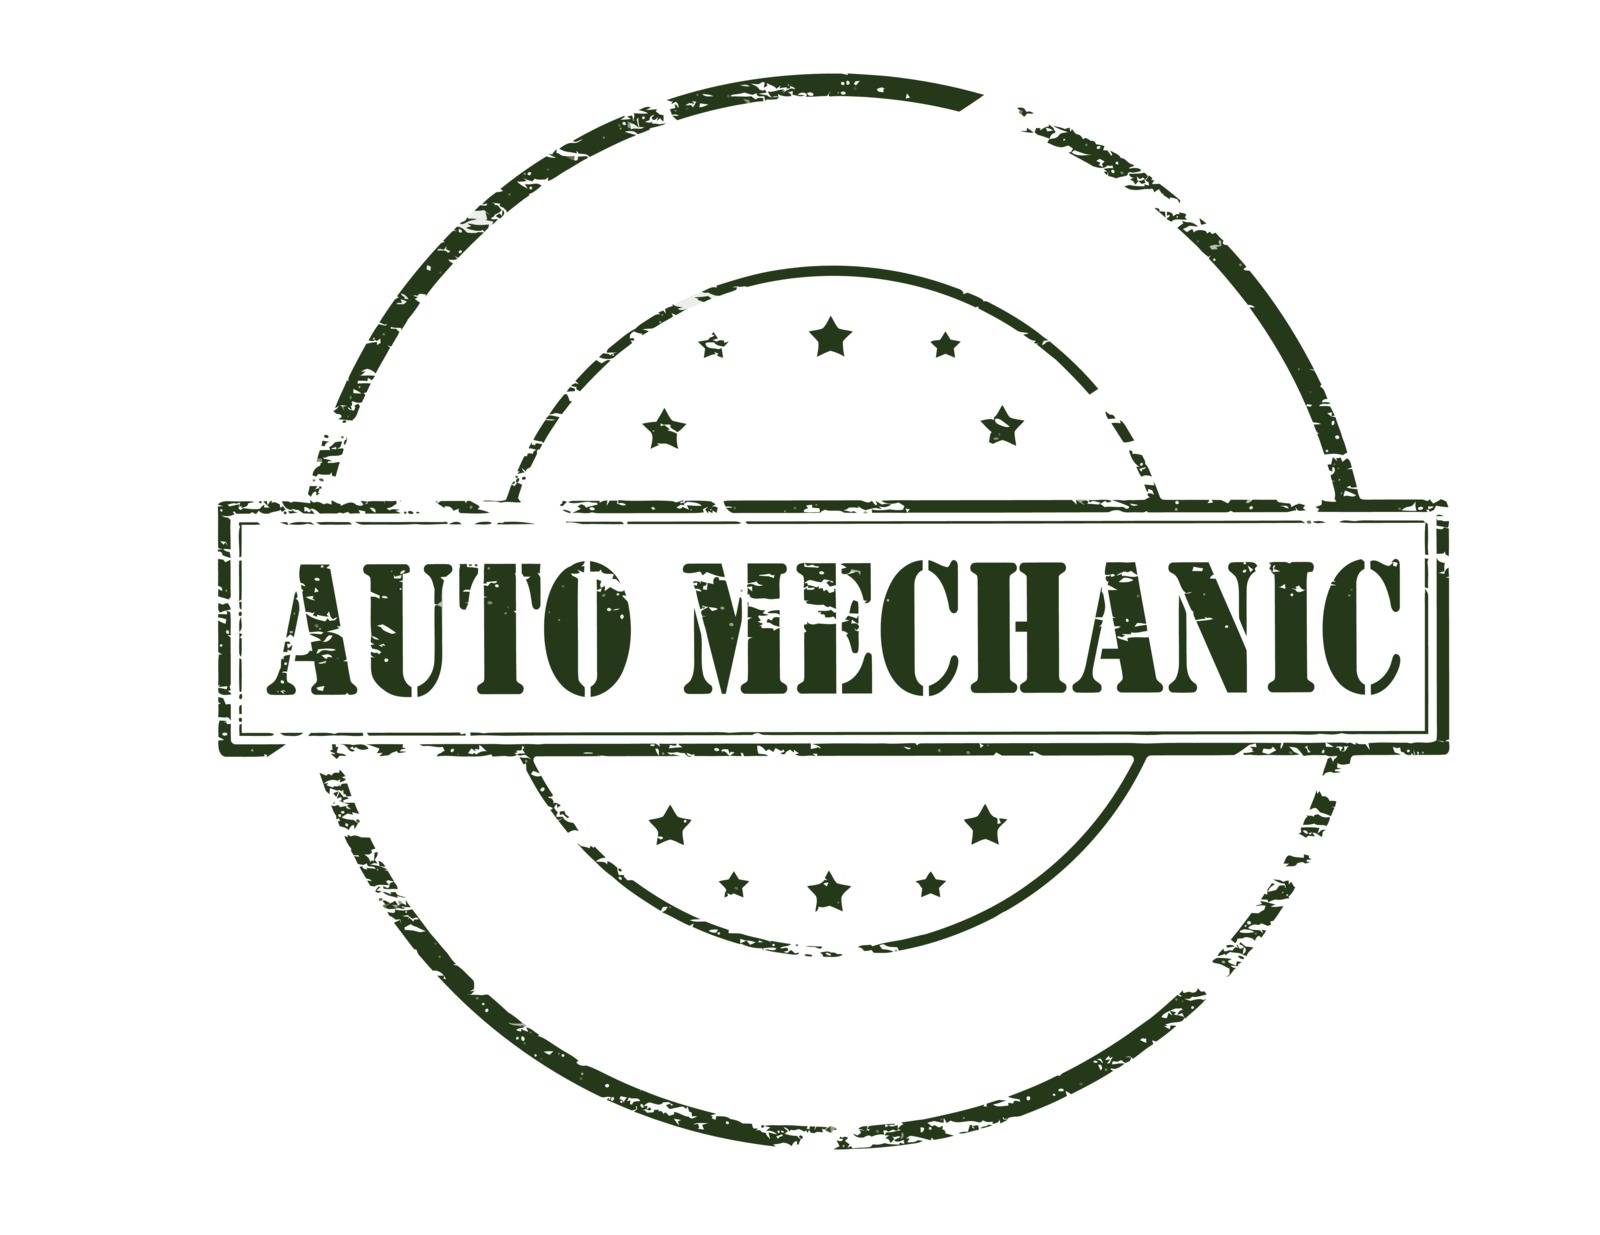 Auto mechanic by carmenbobo